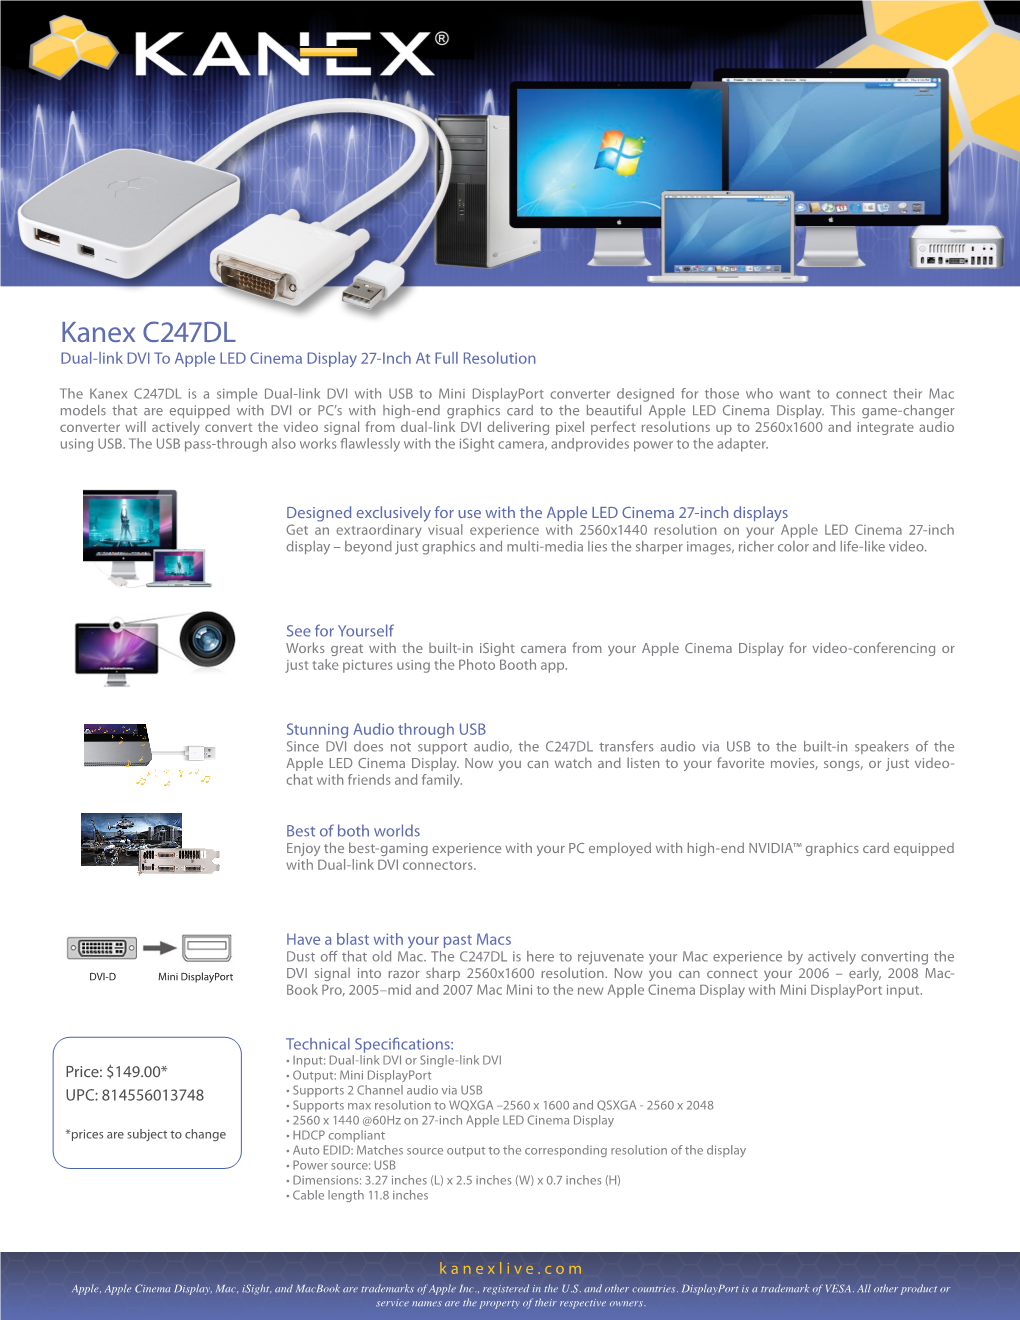 Kanex C247DL Dual-Link DVI to Apple LED Cinema Display 27-Inch at Full Resolution